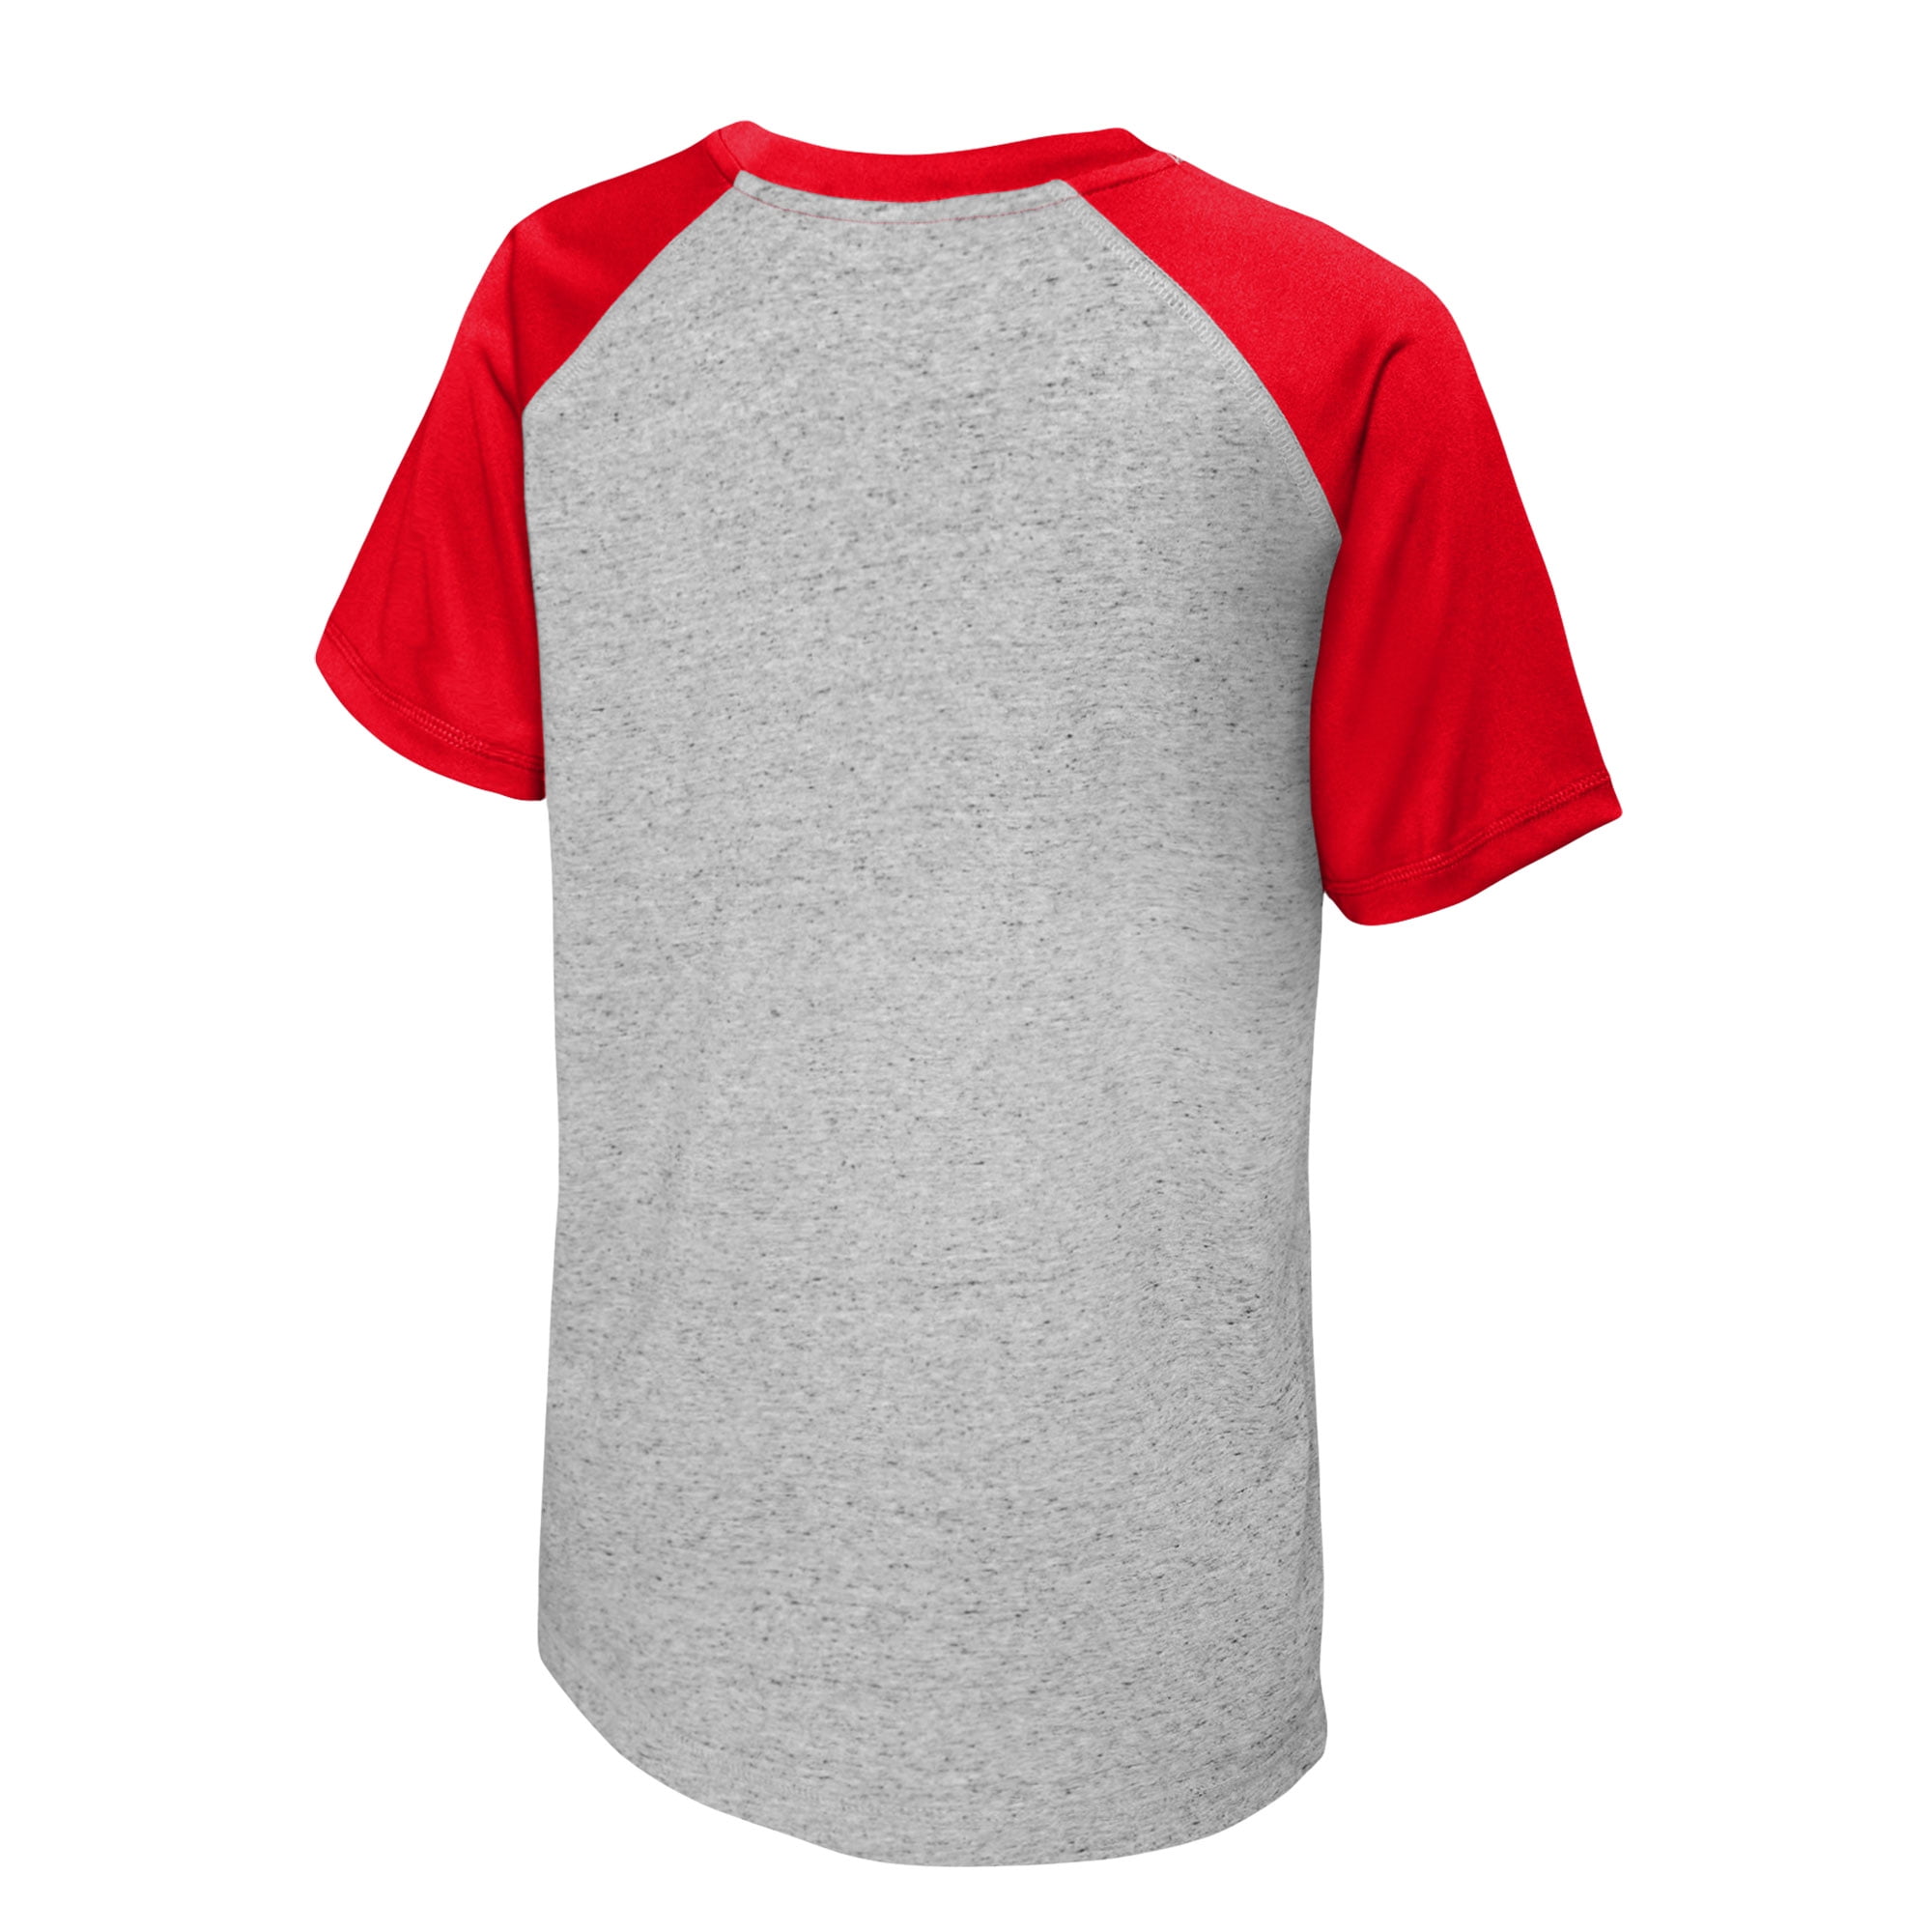 NBL St Louis Cardinals General Merchandise Red Short Sleeve T Shirt Unisex  XL 